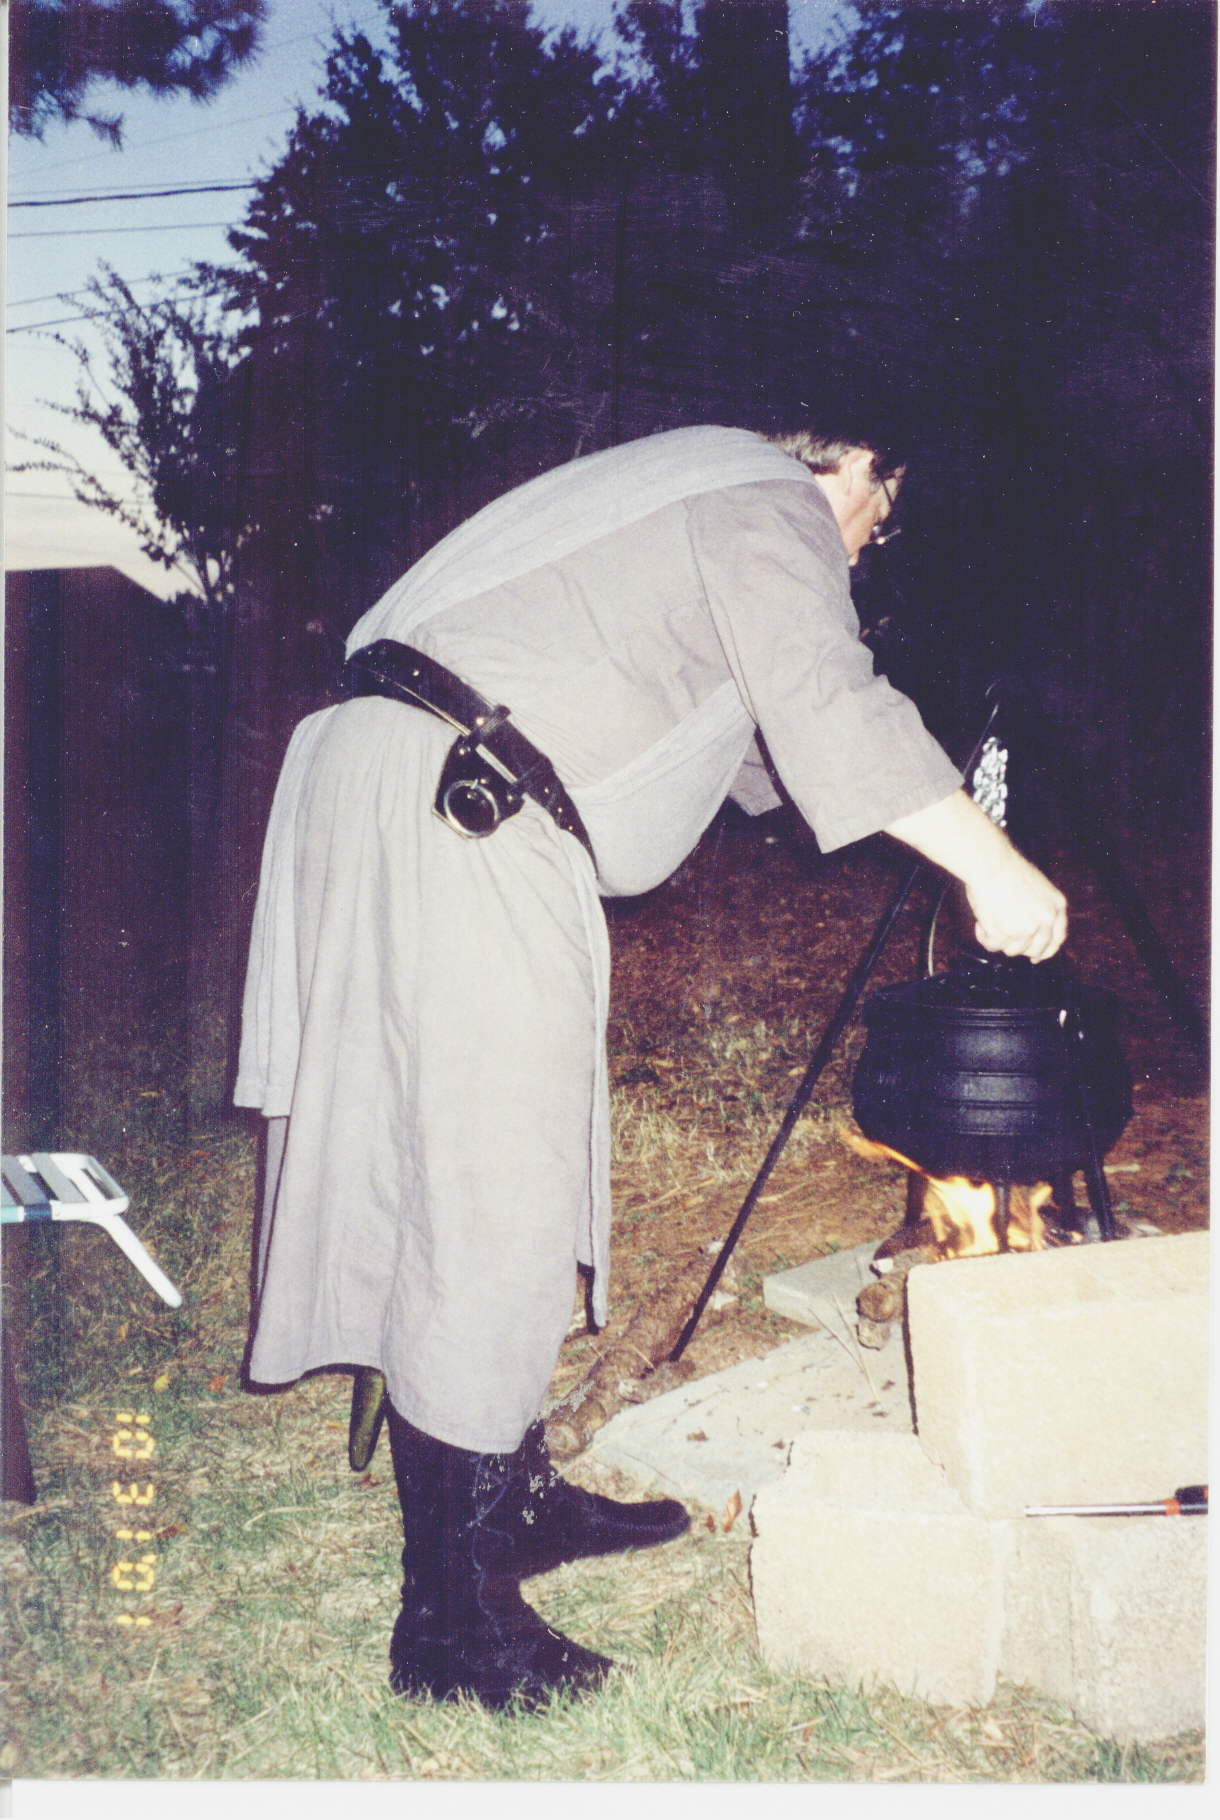 Steven stirring the cauldron of Brunswick Stew.